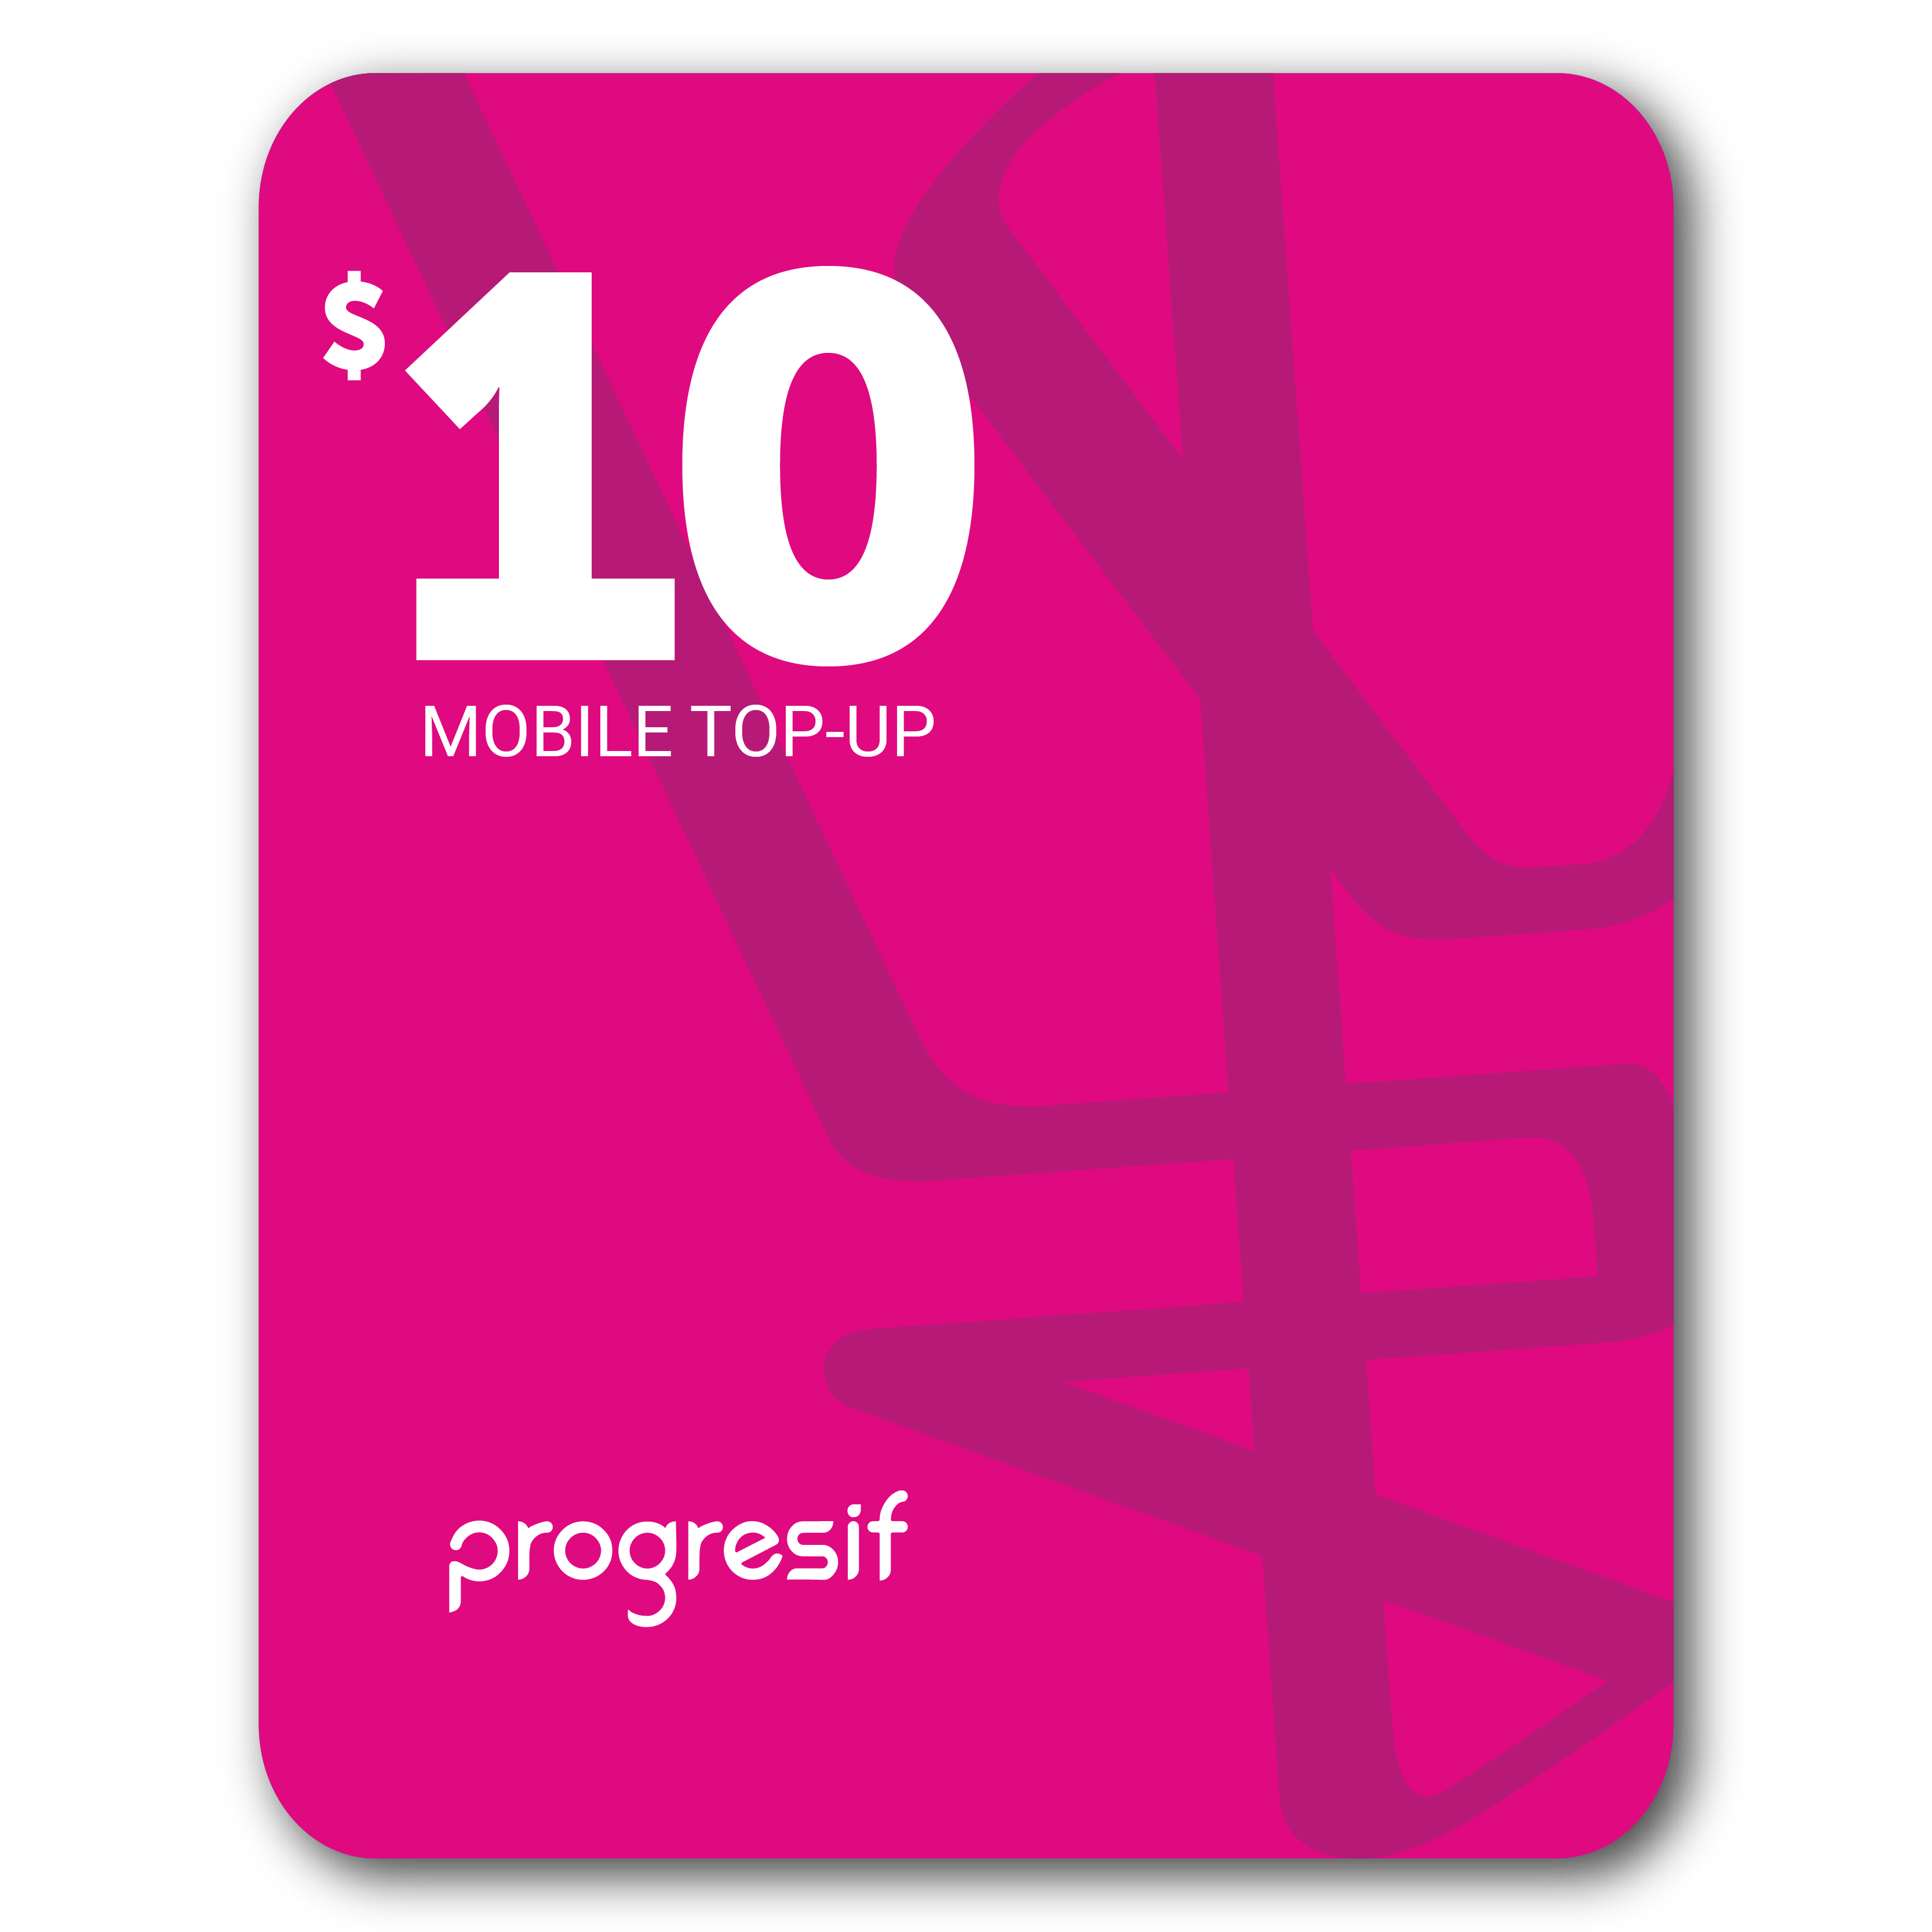 Progresif Mobile Top-Up $10 -